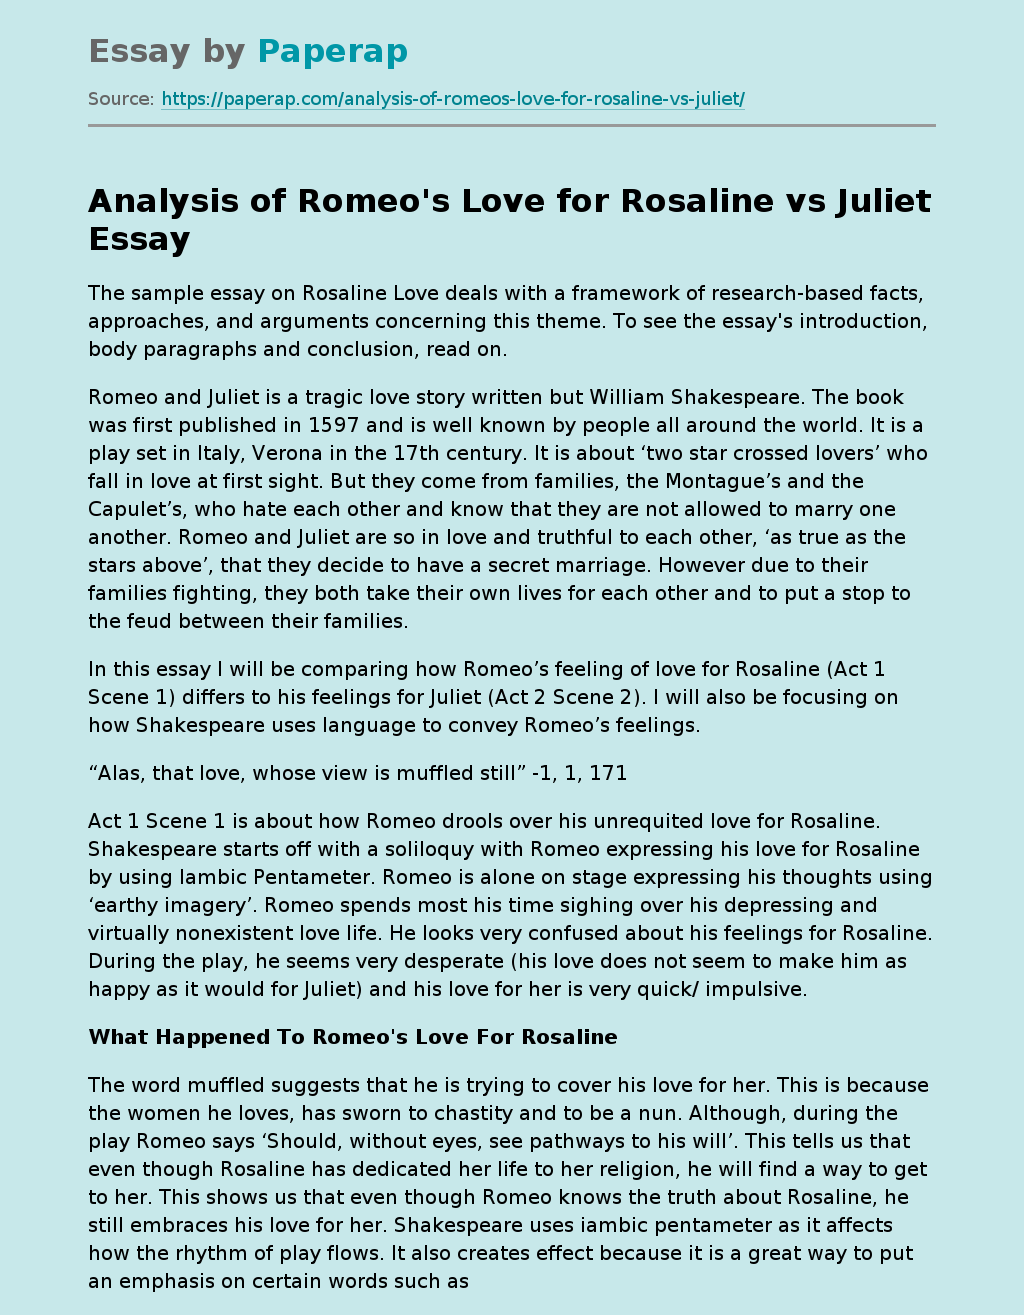 Analysis of Romeo's Love for Rosaline vs Juliet